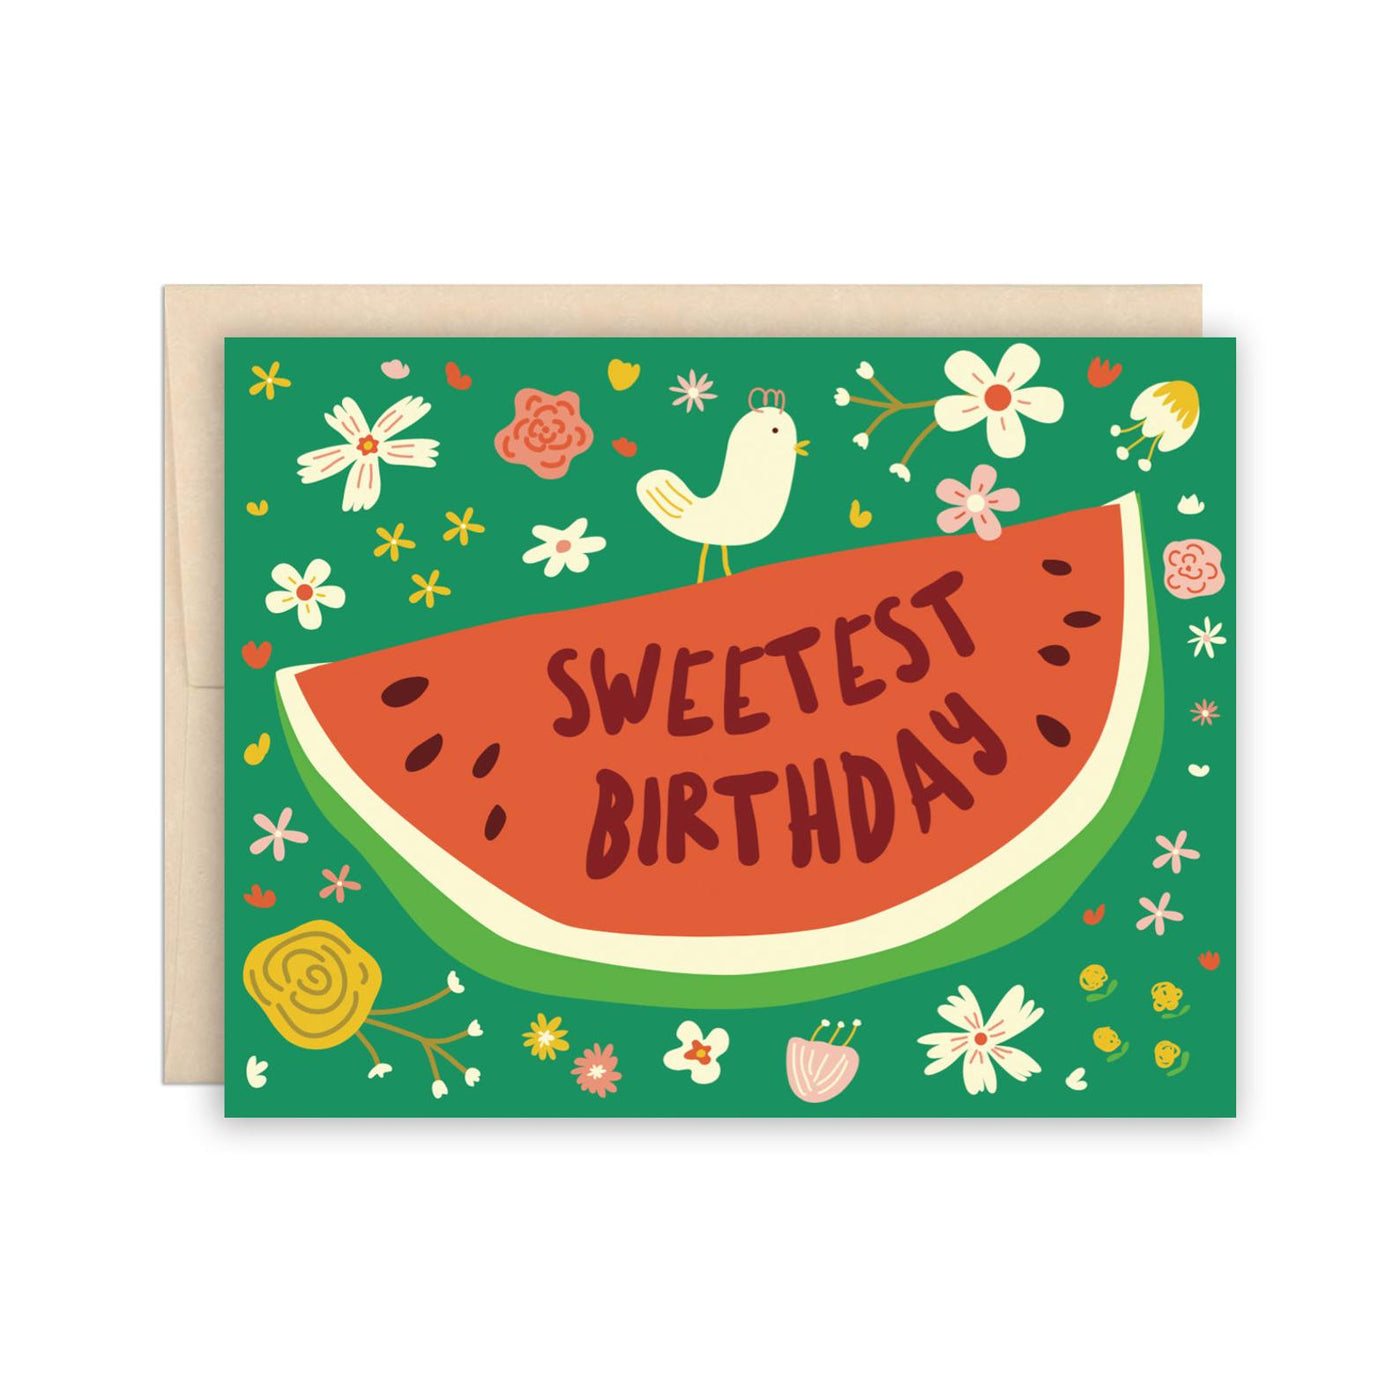 Sweetest Birthday Watermelon Card | The Beautiful Project | Birthday